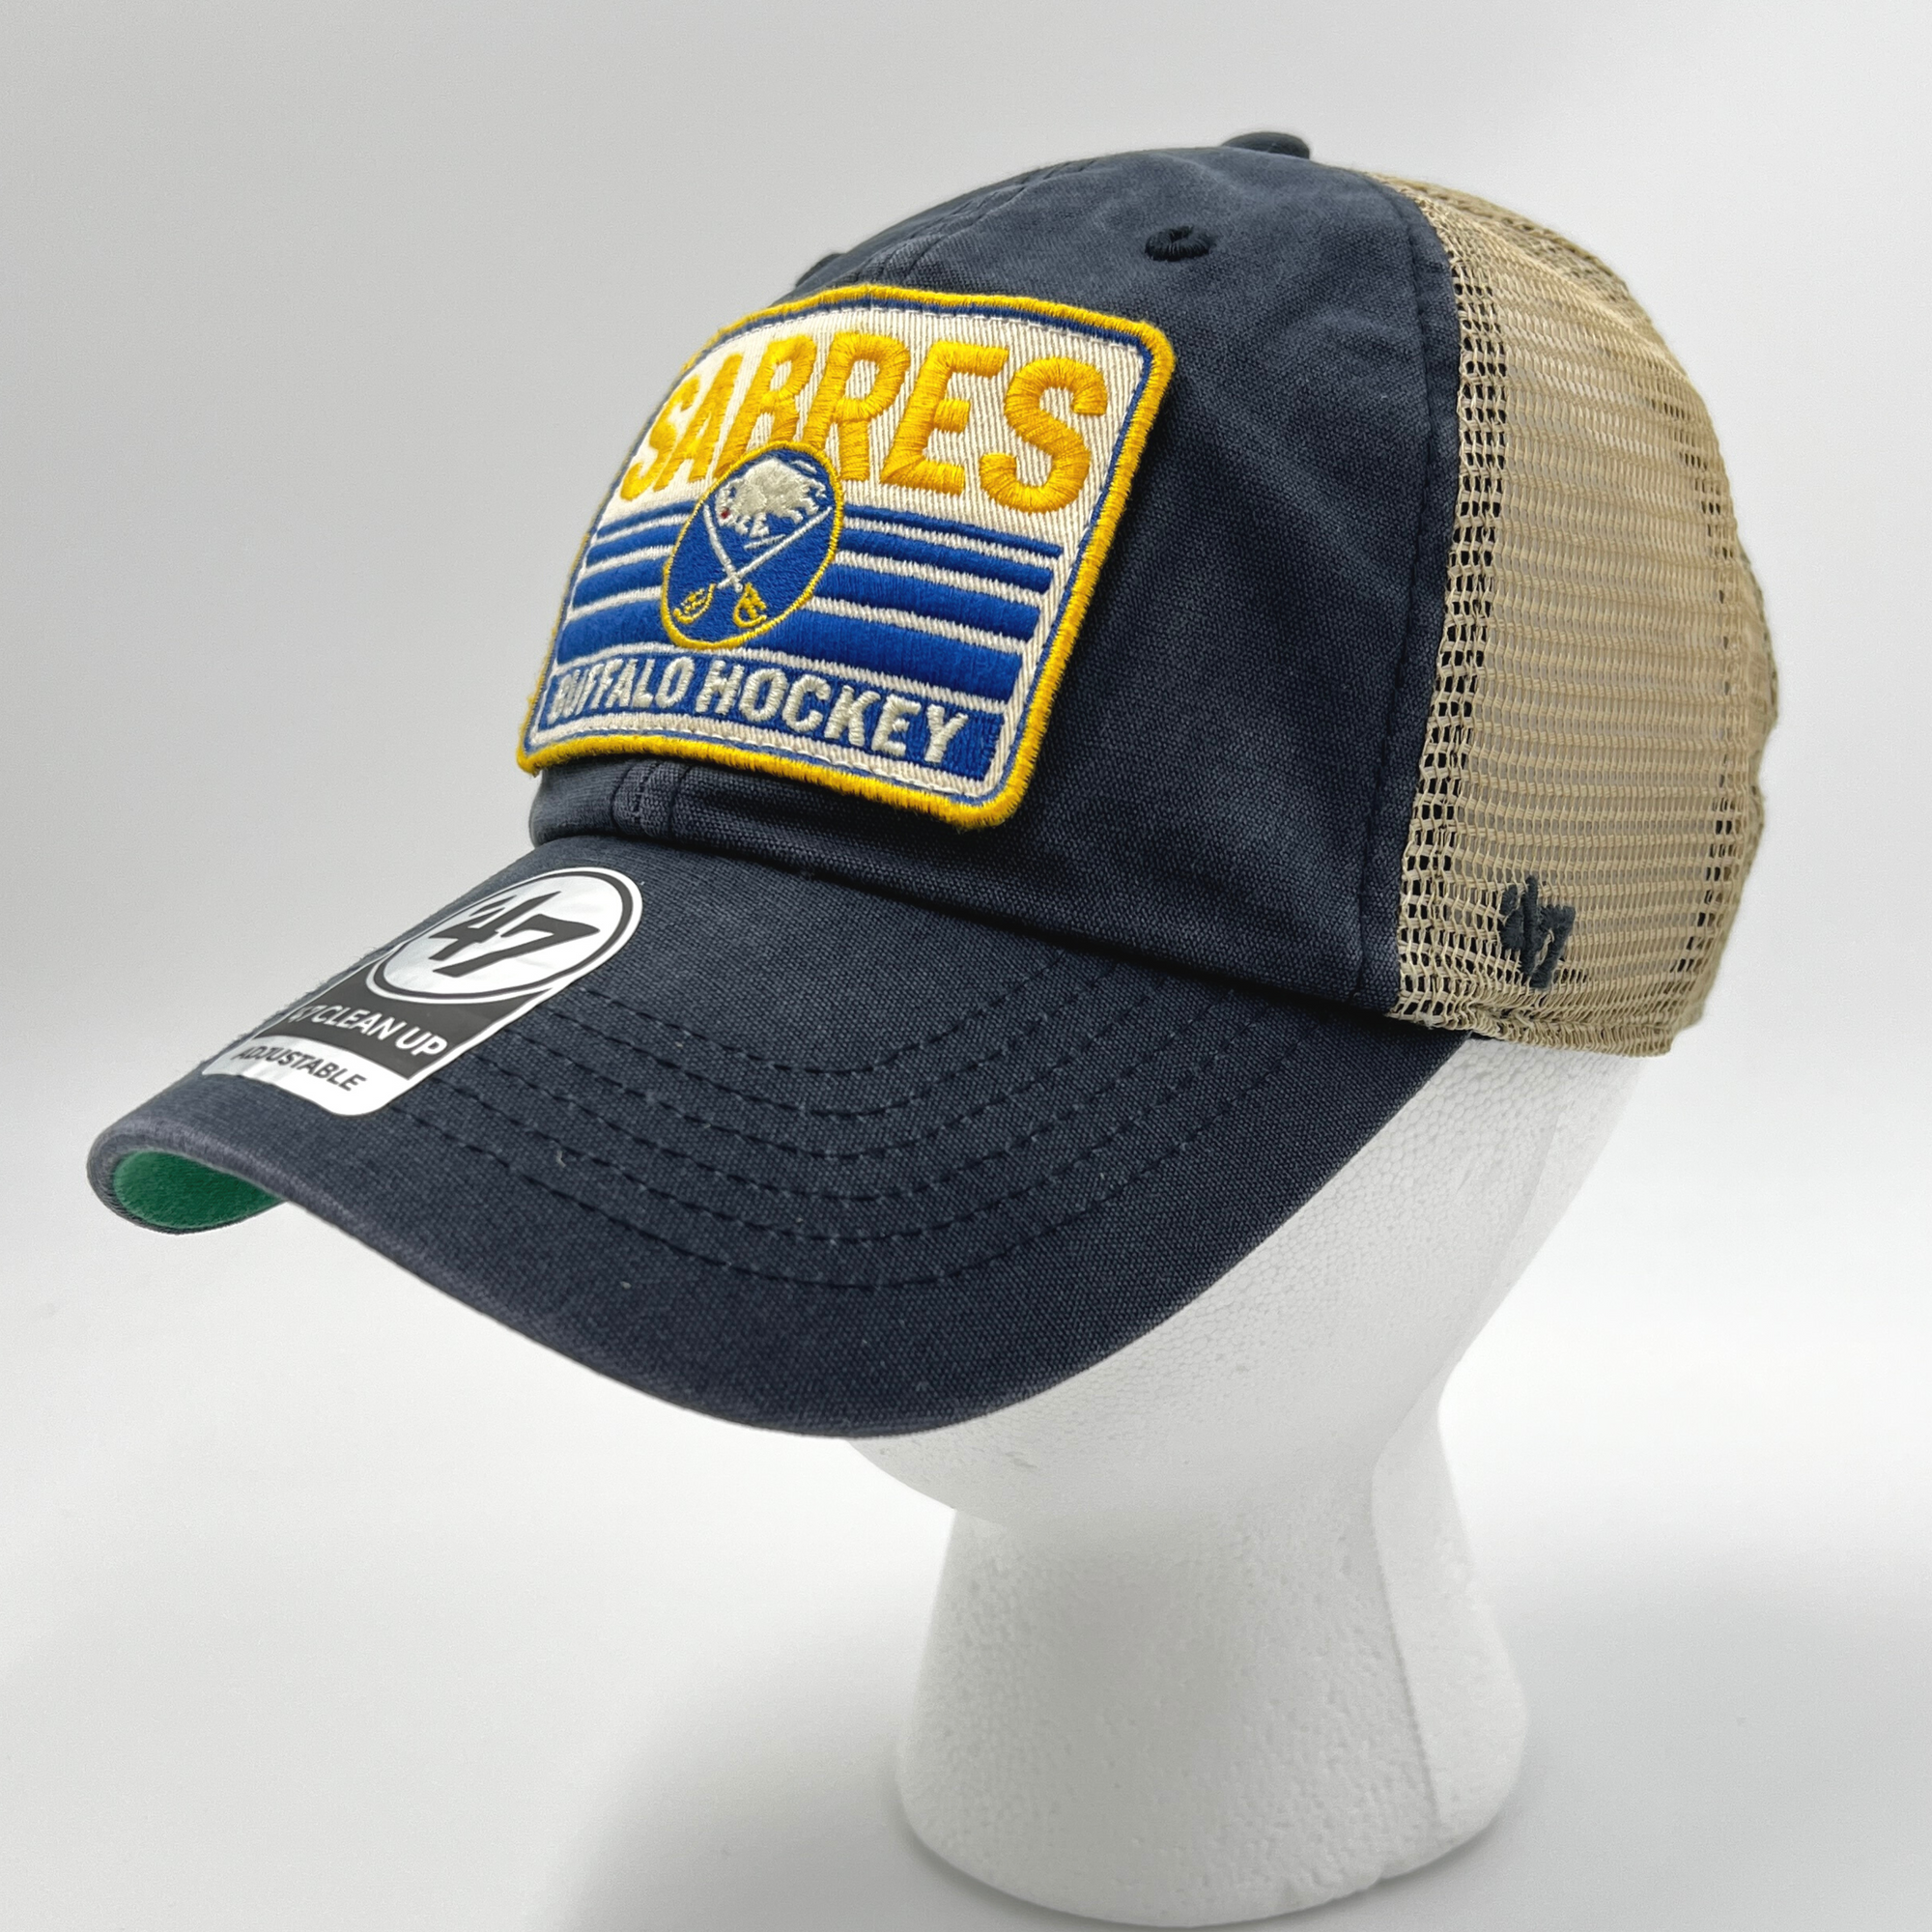 &#39;47 Brand Buffalo Sabres Hockey Vintage Adjustable Hat